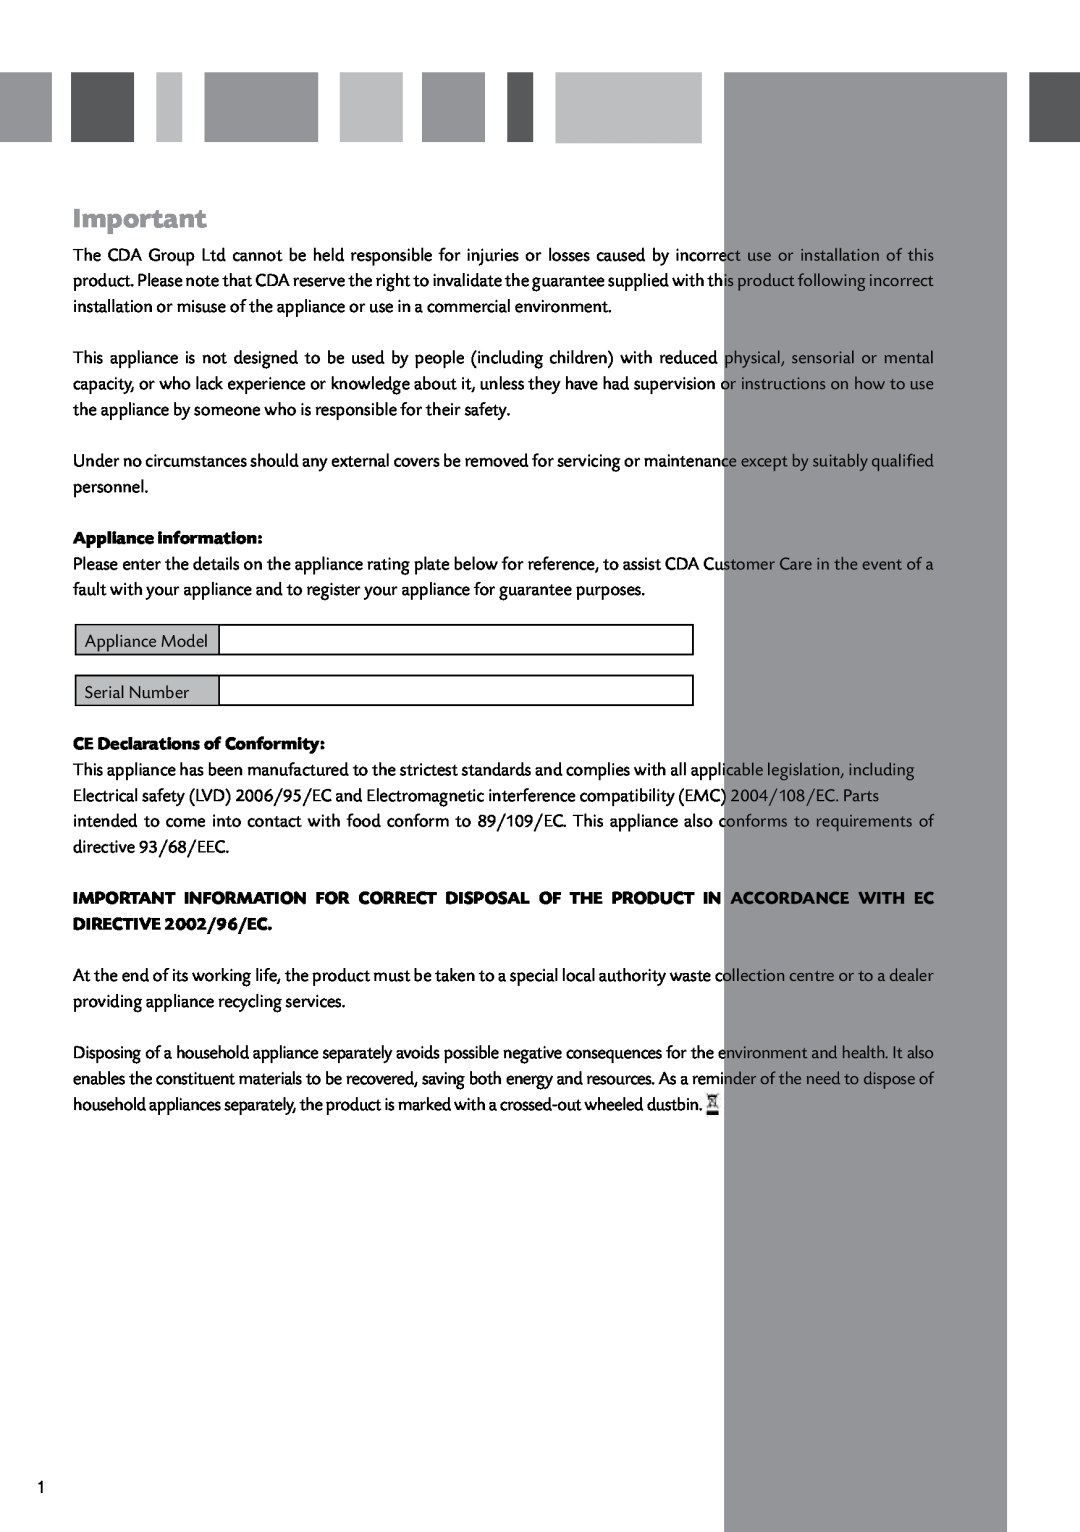 CDA HCC762 manual Appliance information, CE Declarations of Conformity 